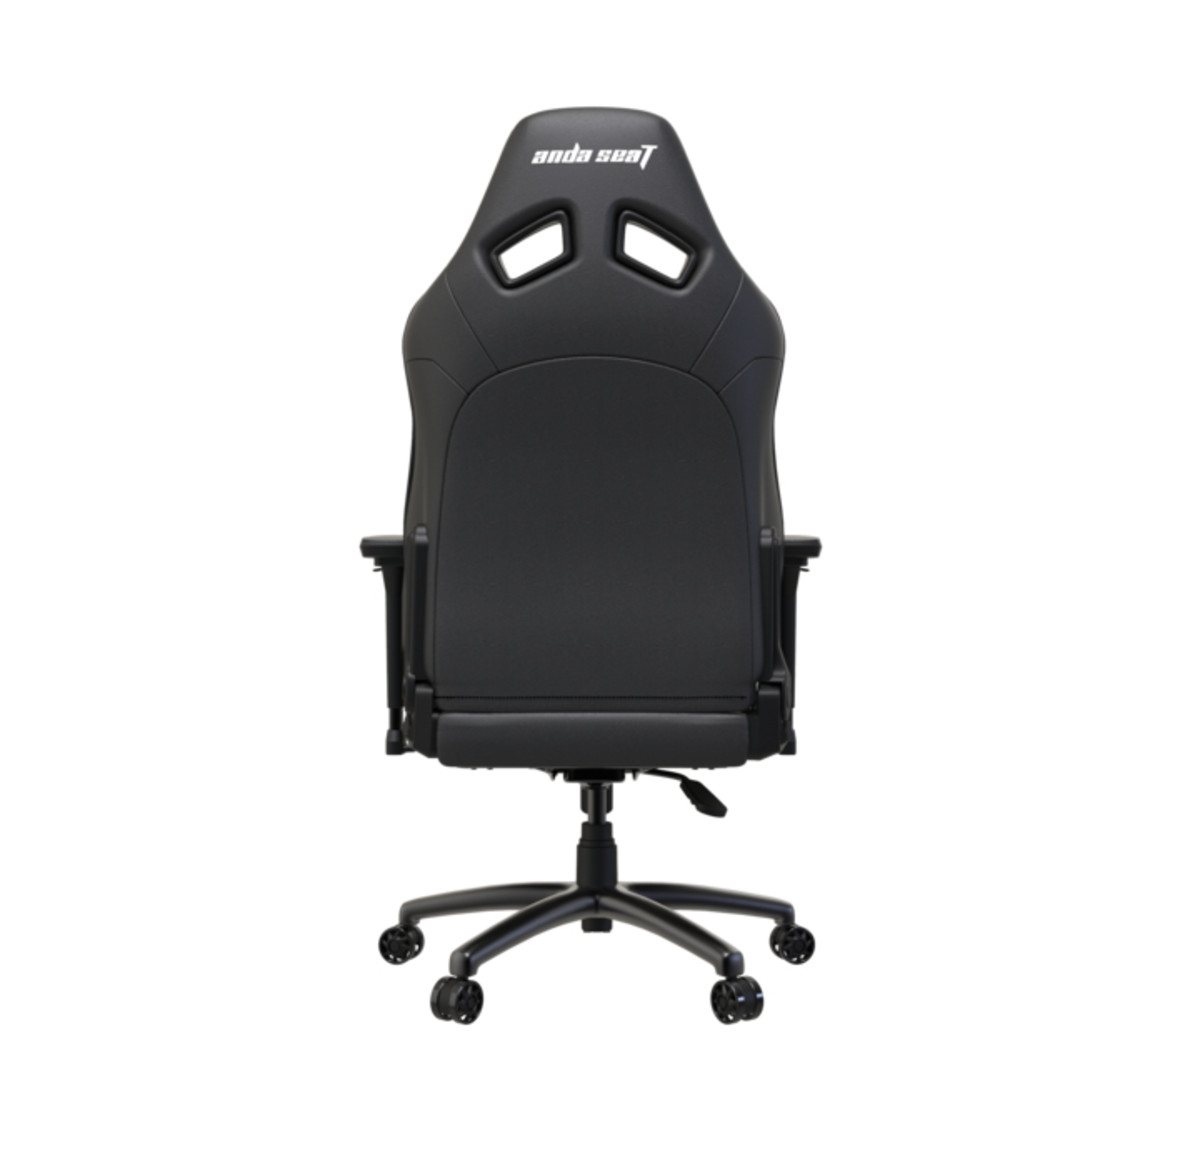 Dark Demon Premium Gaming Chair Black